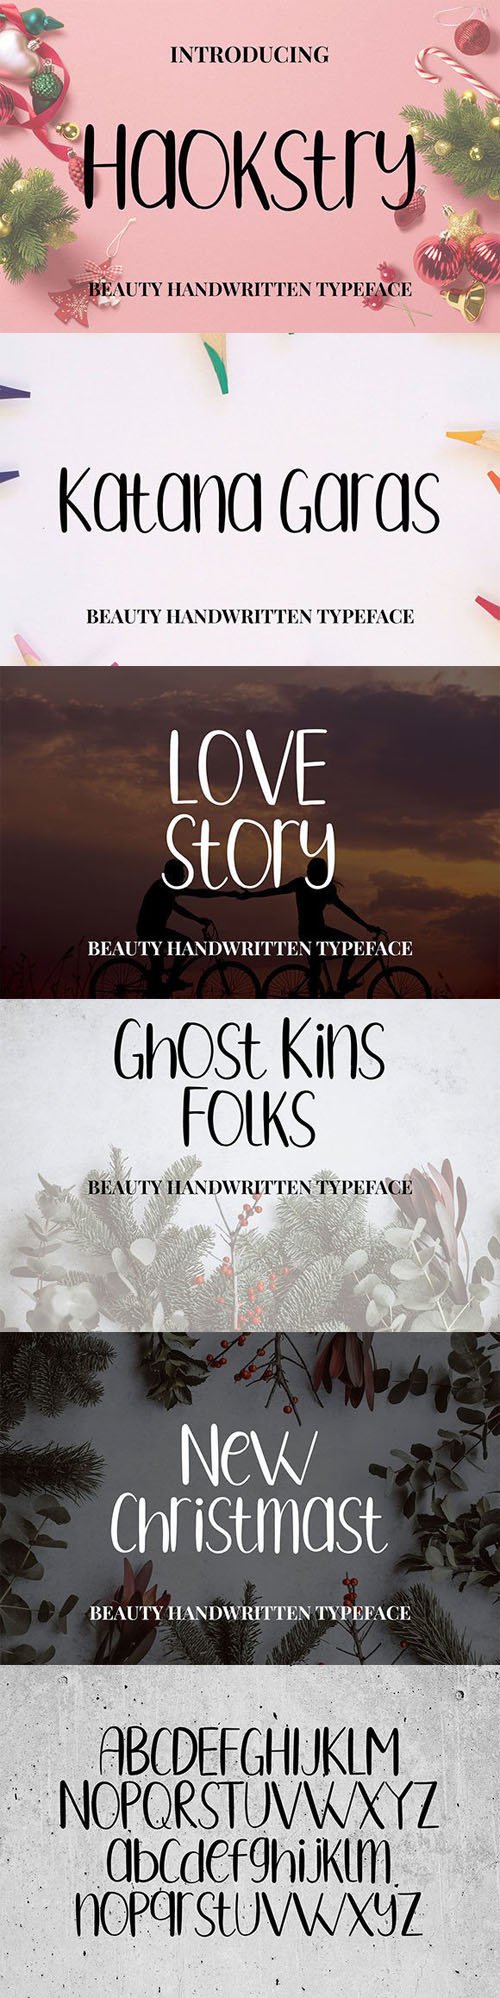 Haokstry - Beauty Handwritten Typeface